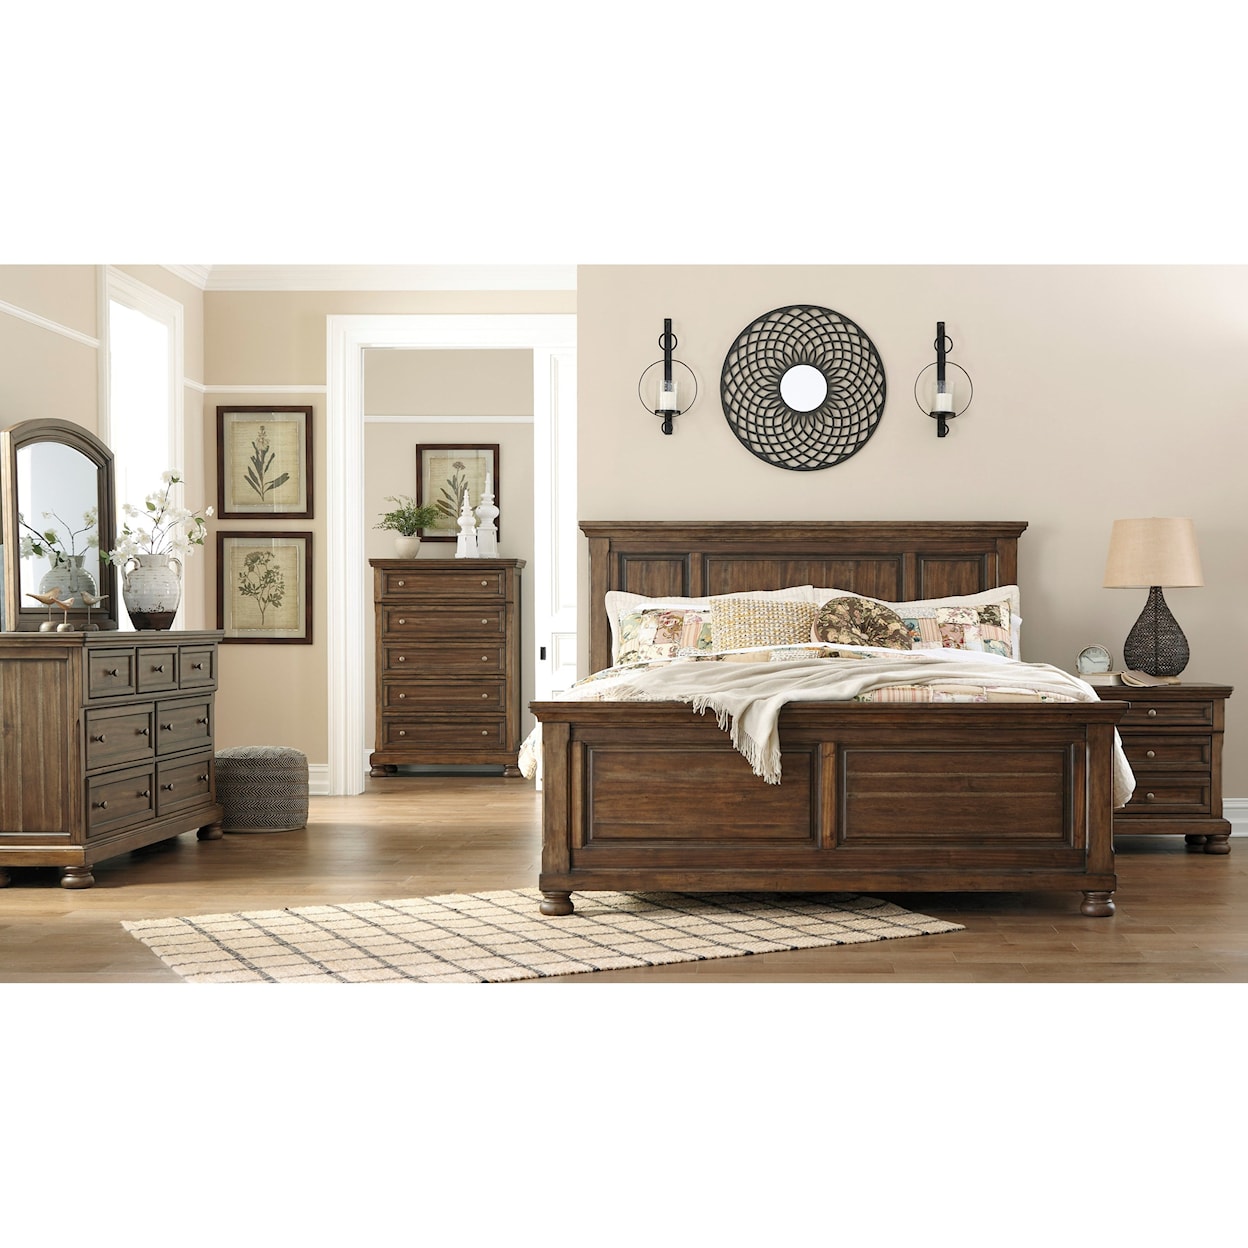 Ashley Furniture Signature Design Flynnter California King Bedroom Group